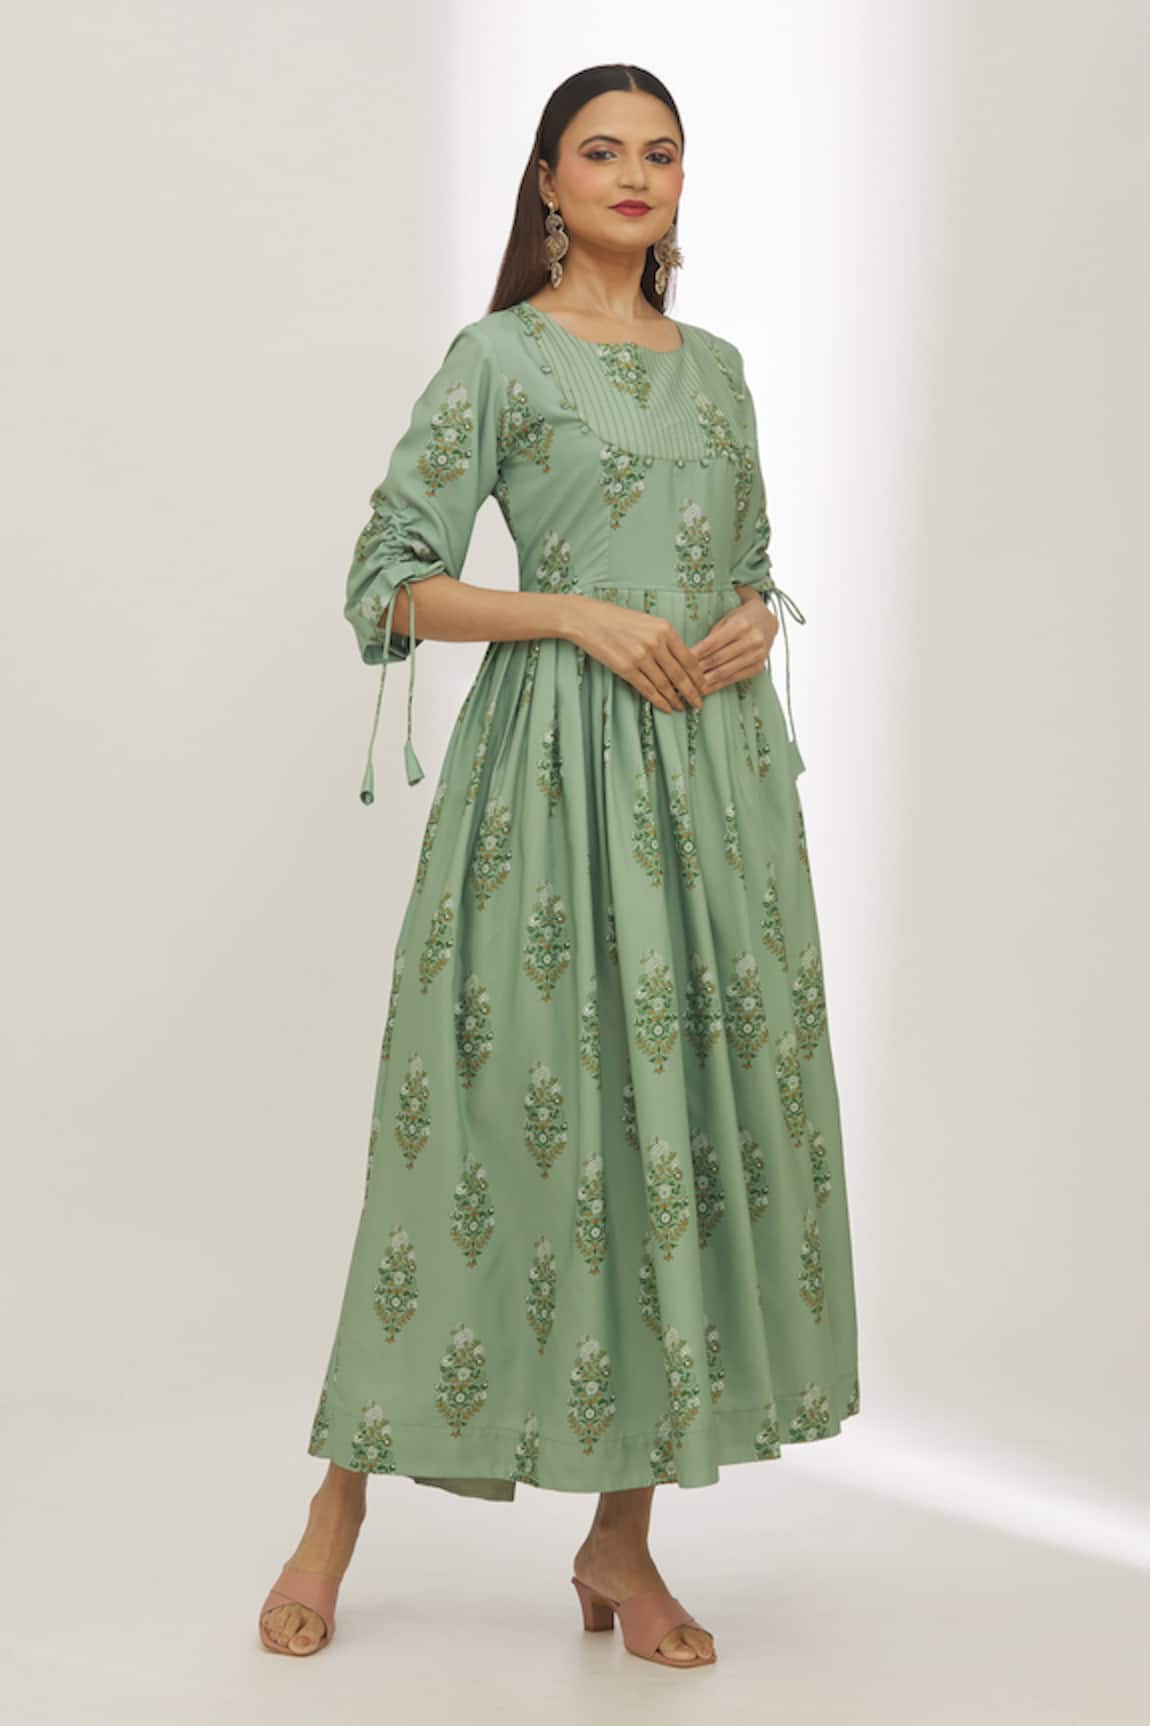 Adara Khan Flower Print Pleated Dress